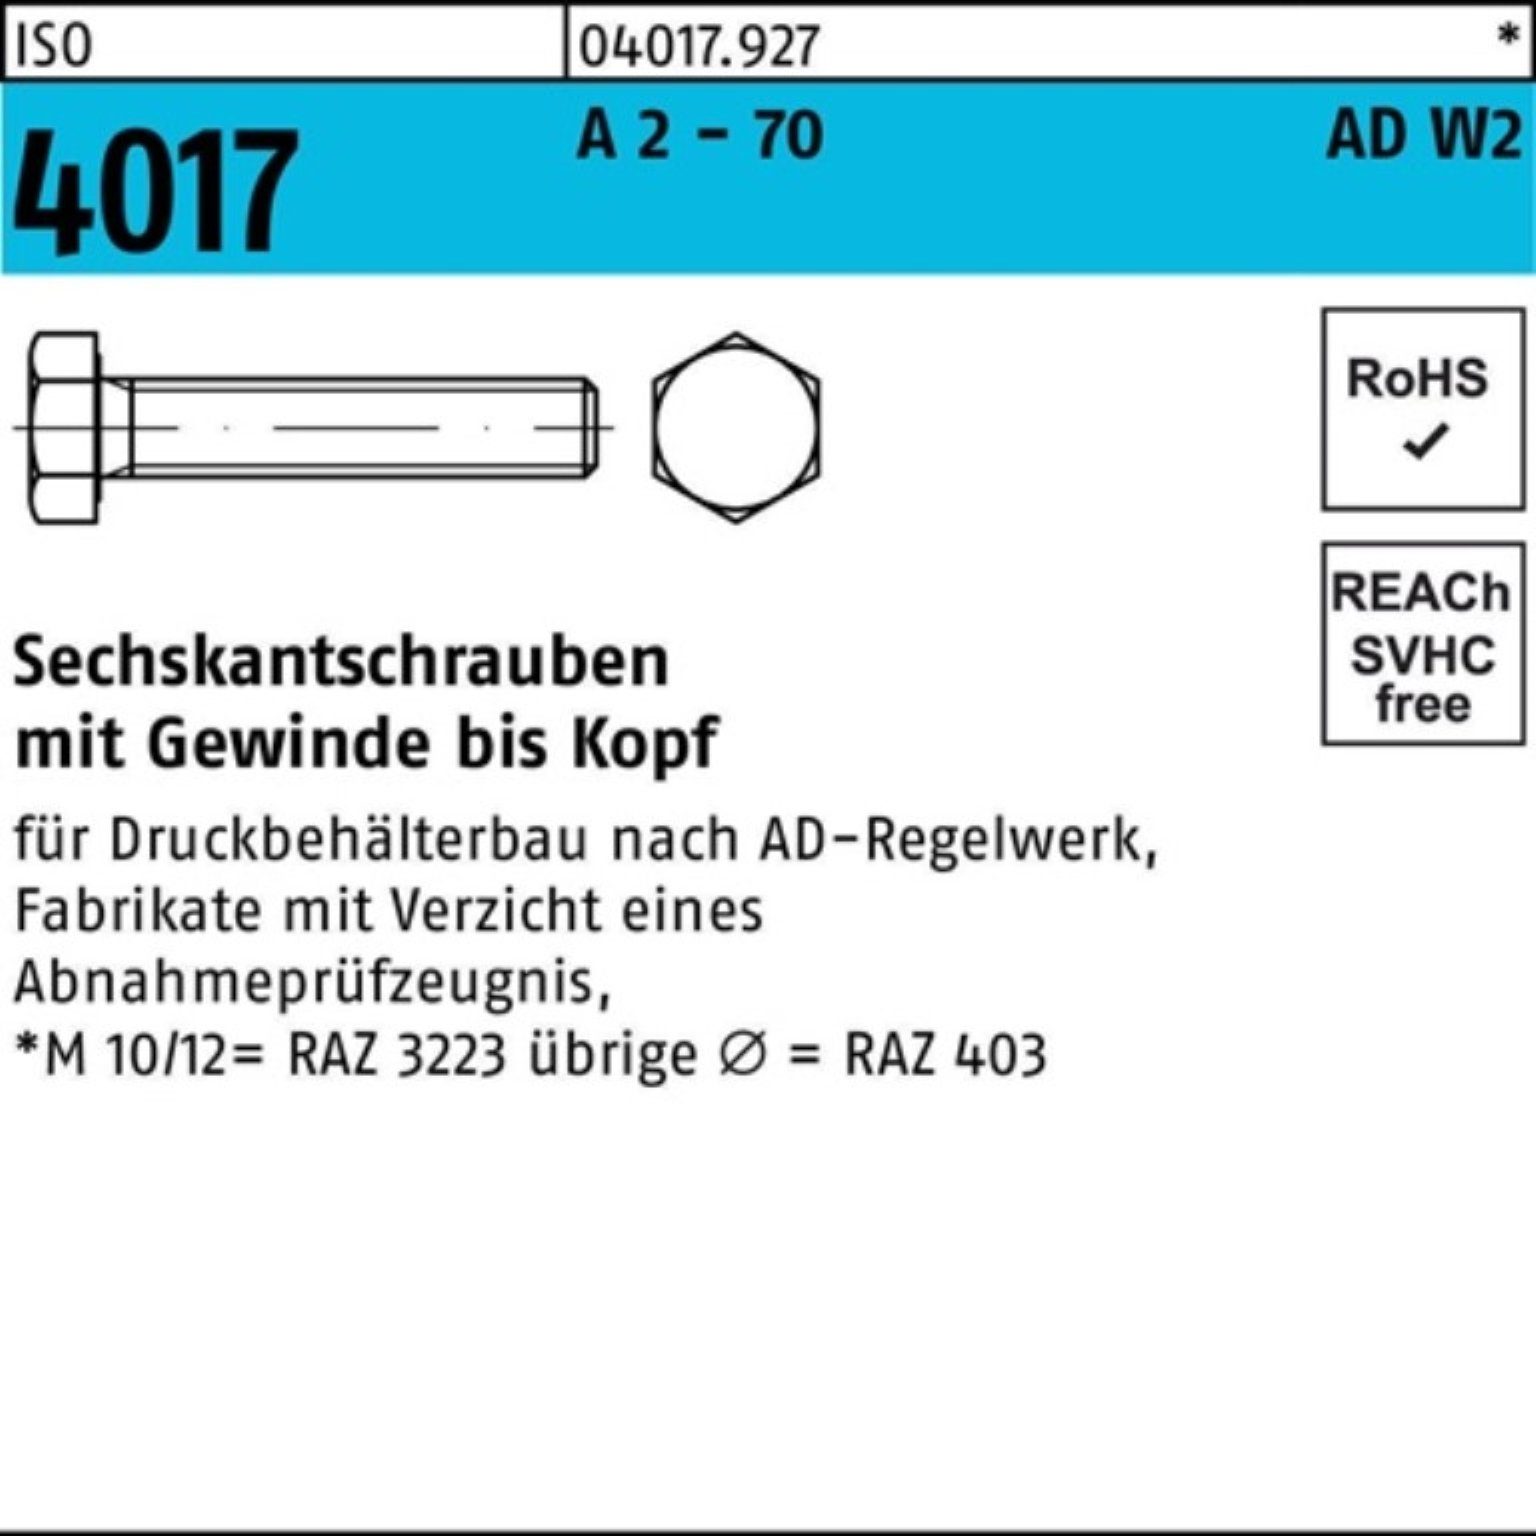 Bufab Sechskantschraube 100er Pack Sechskantschraube ISO 4017 VG M20x 55 A 2 - 70 AD-W2 25 St